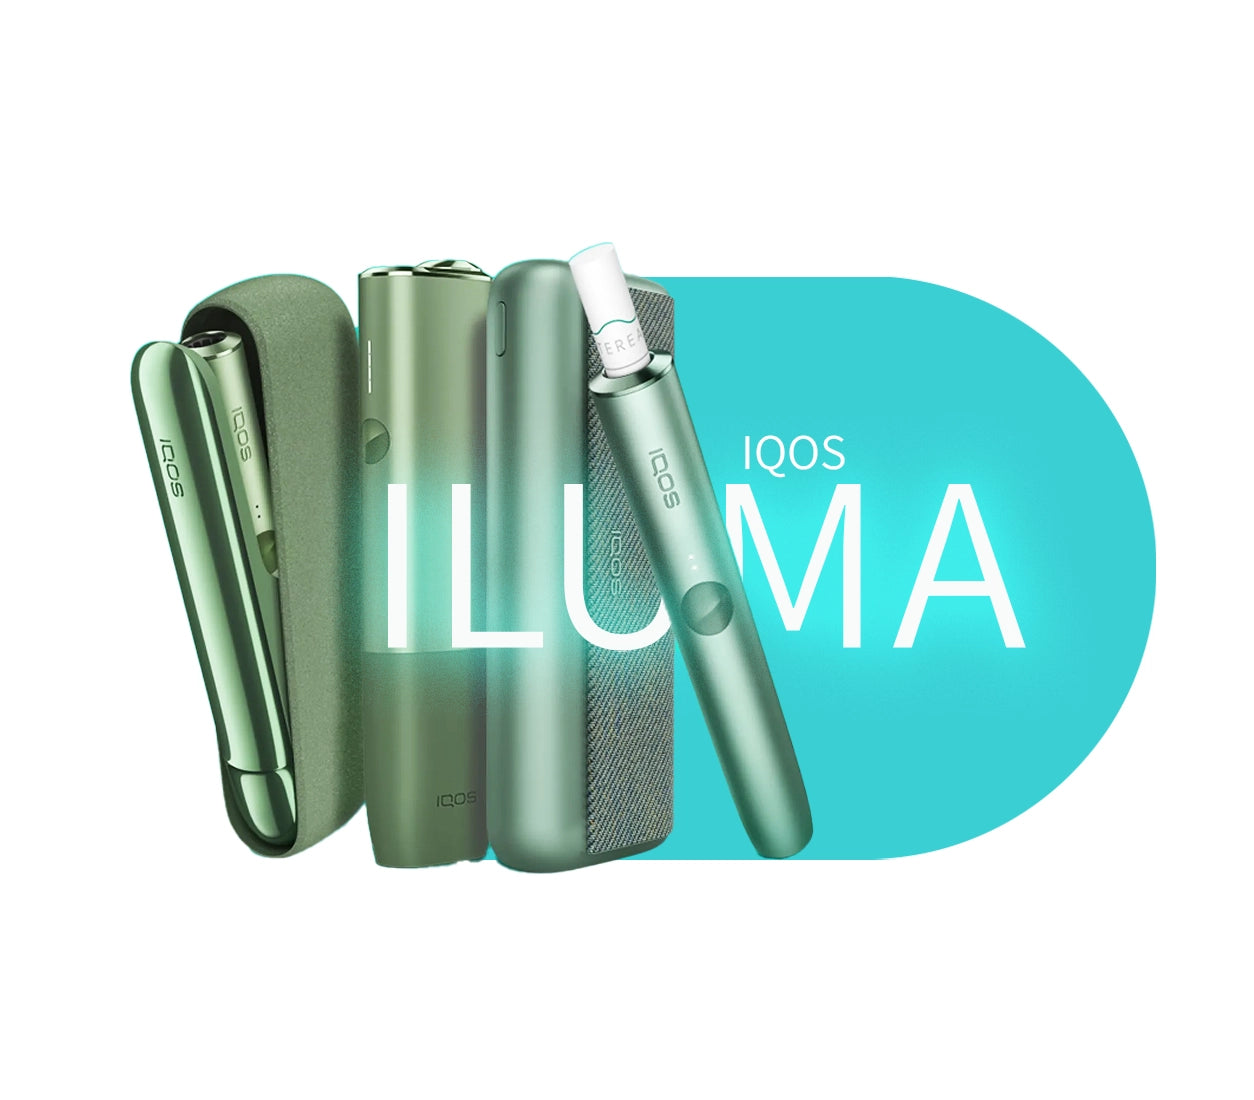 IQOS ILUMA collection